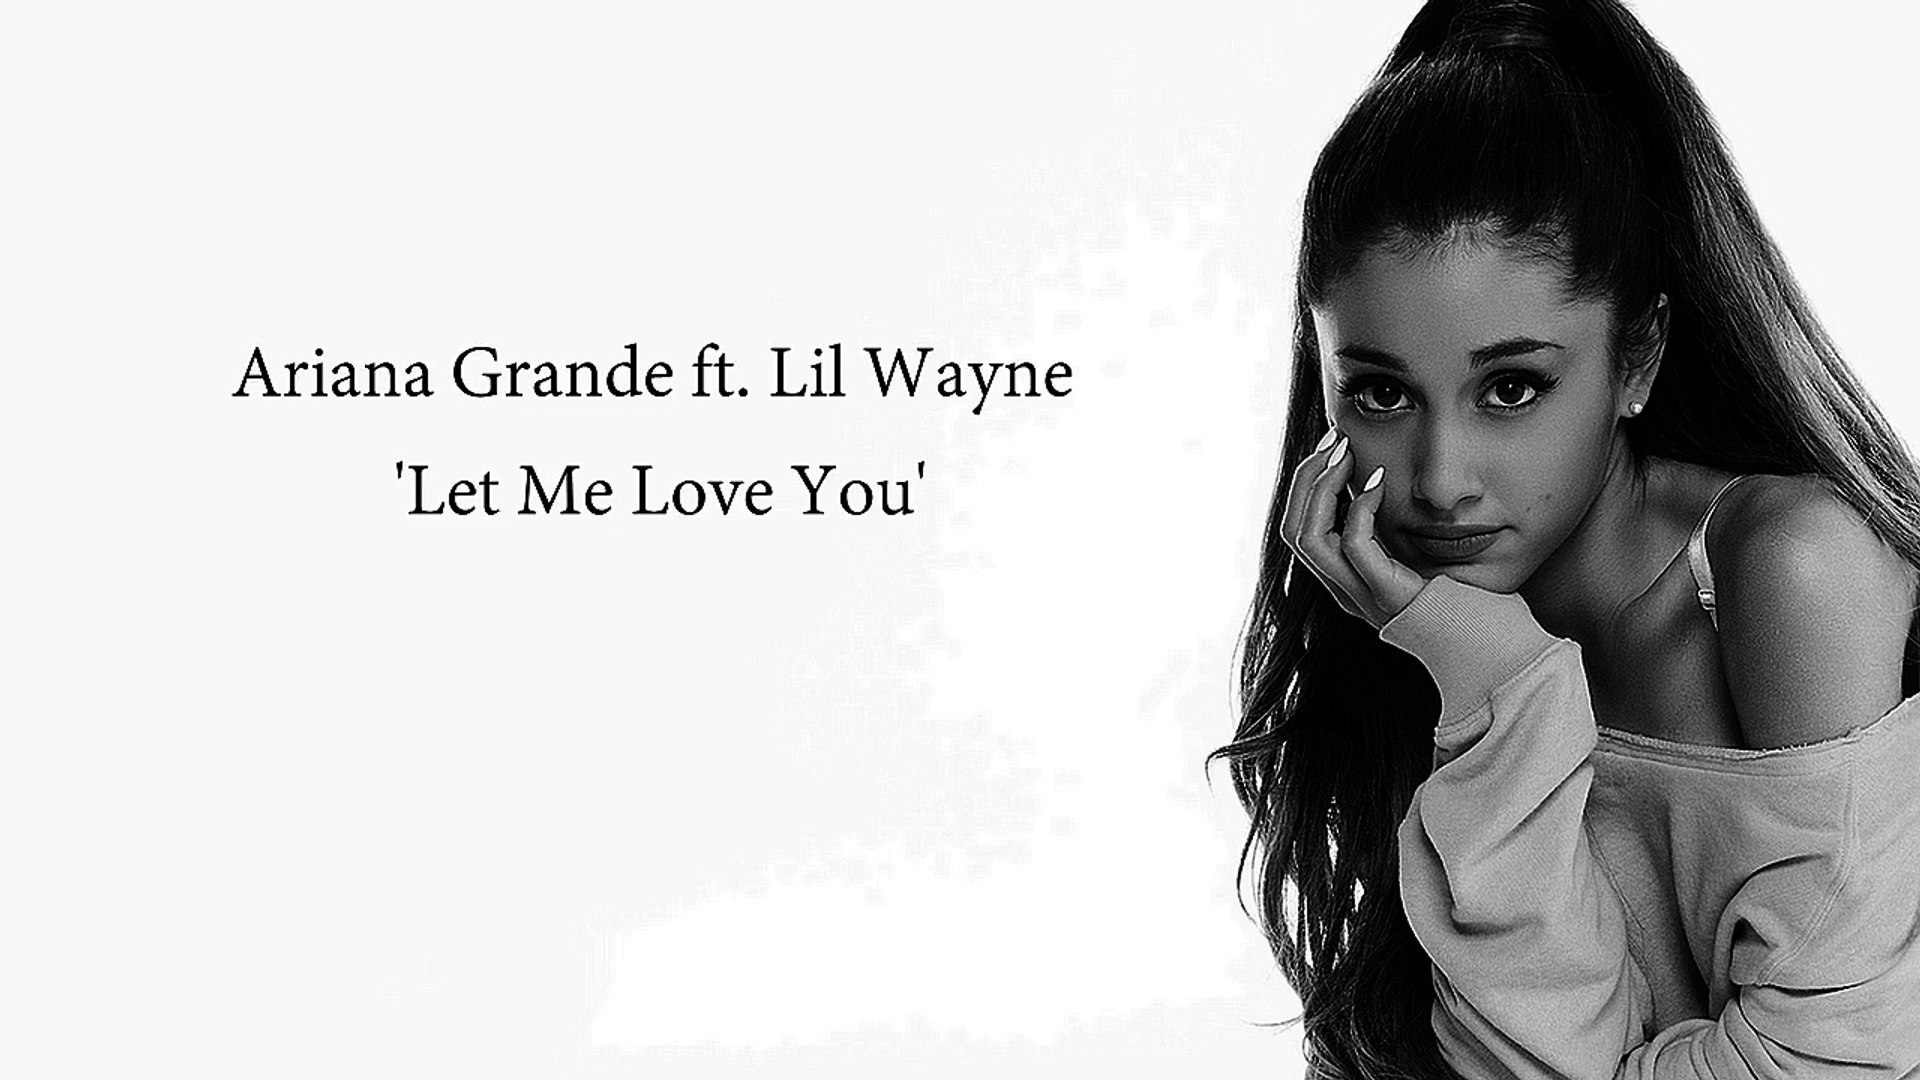 Песня арианы гранде yes and перевод. Ariana grande - Let me Love you ft. Lil Wayne.